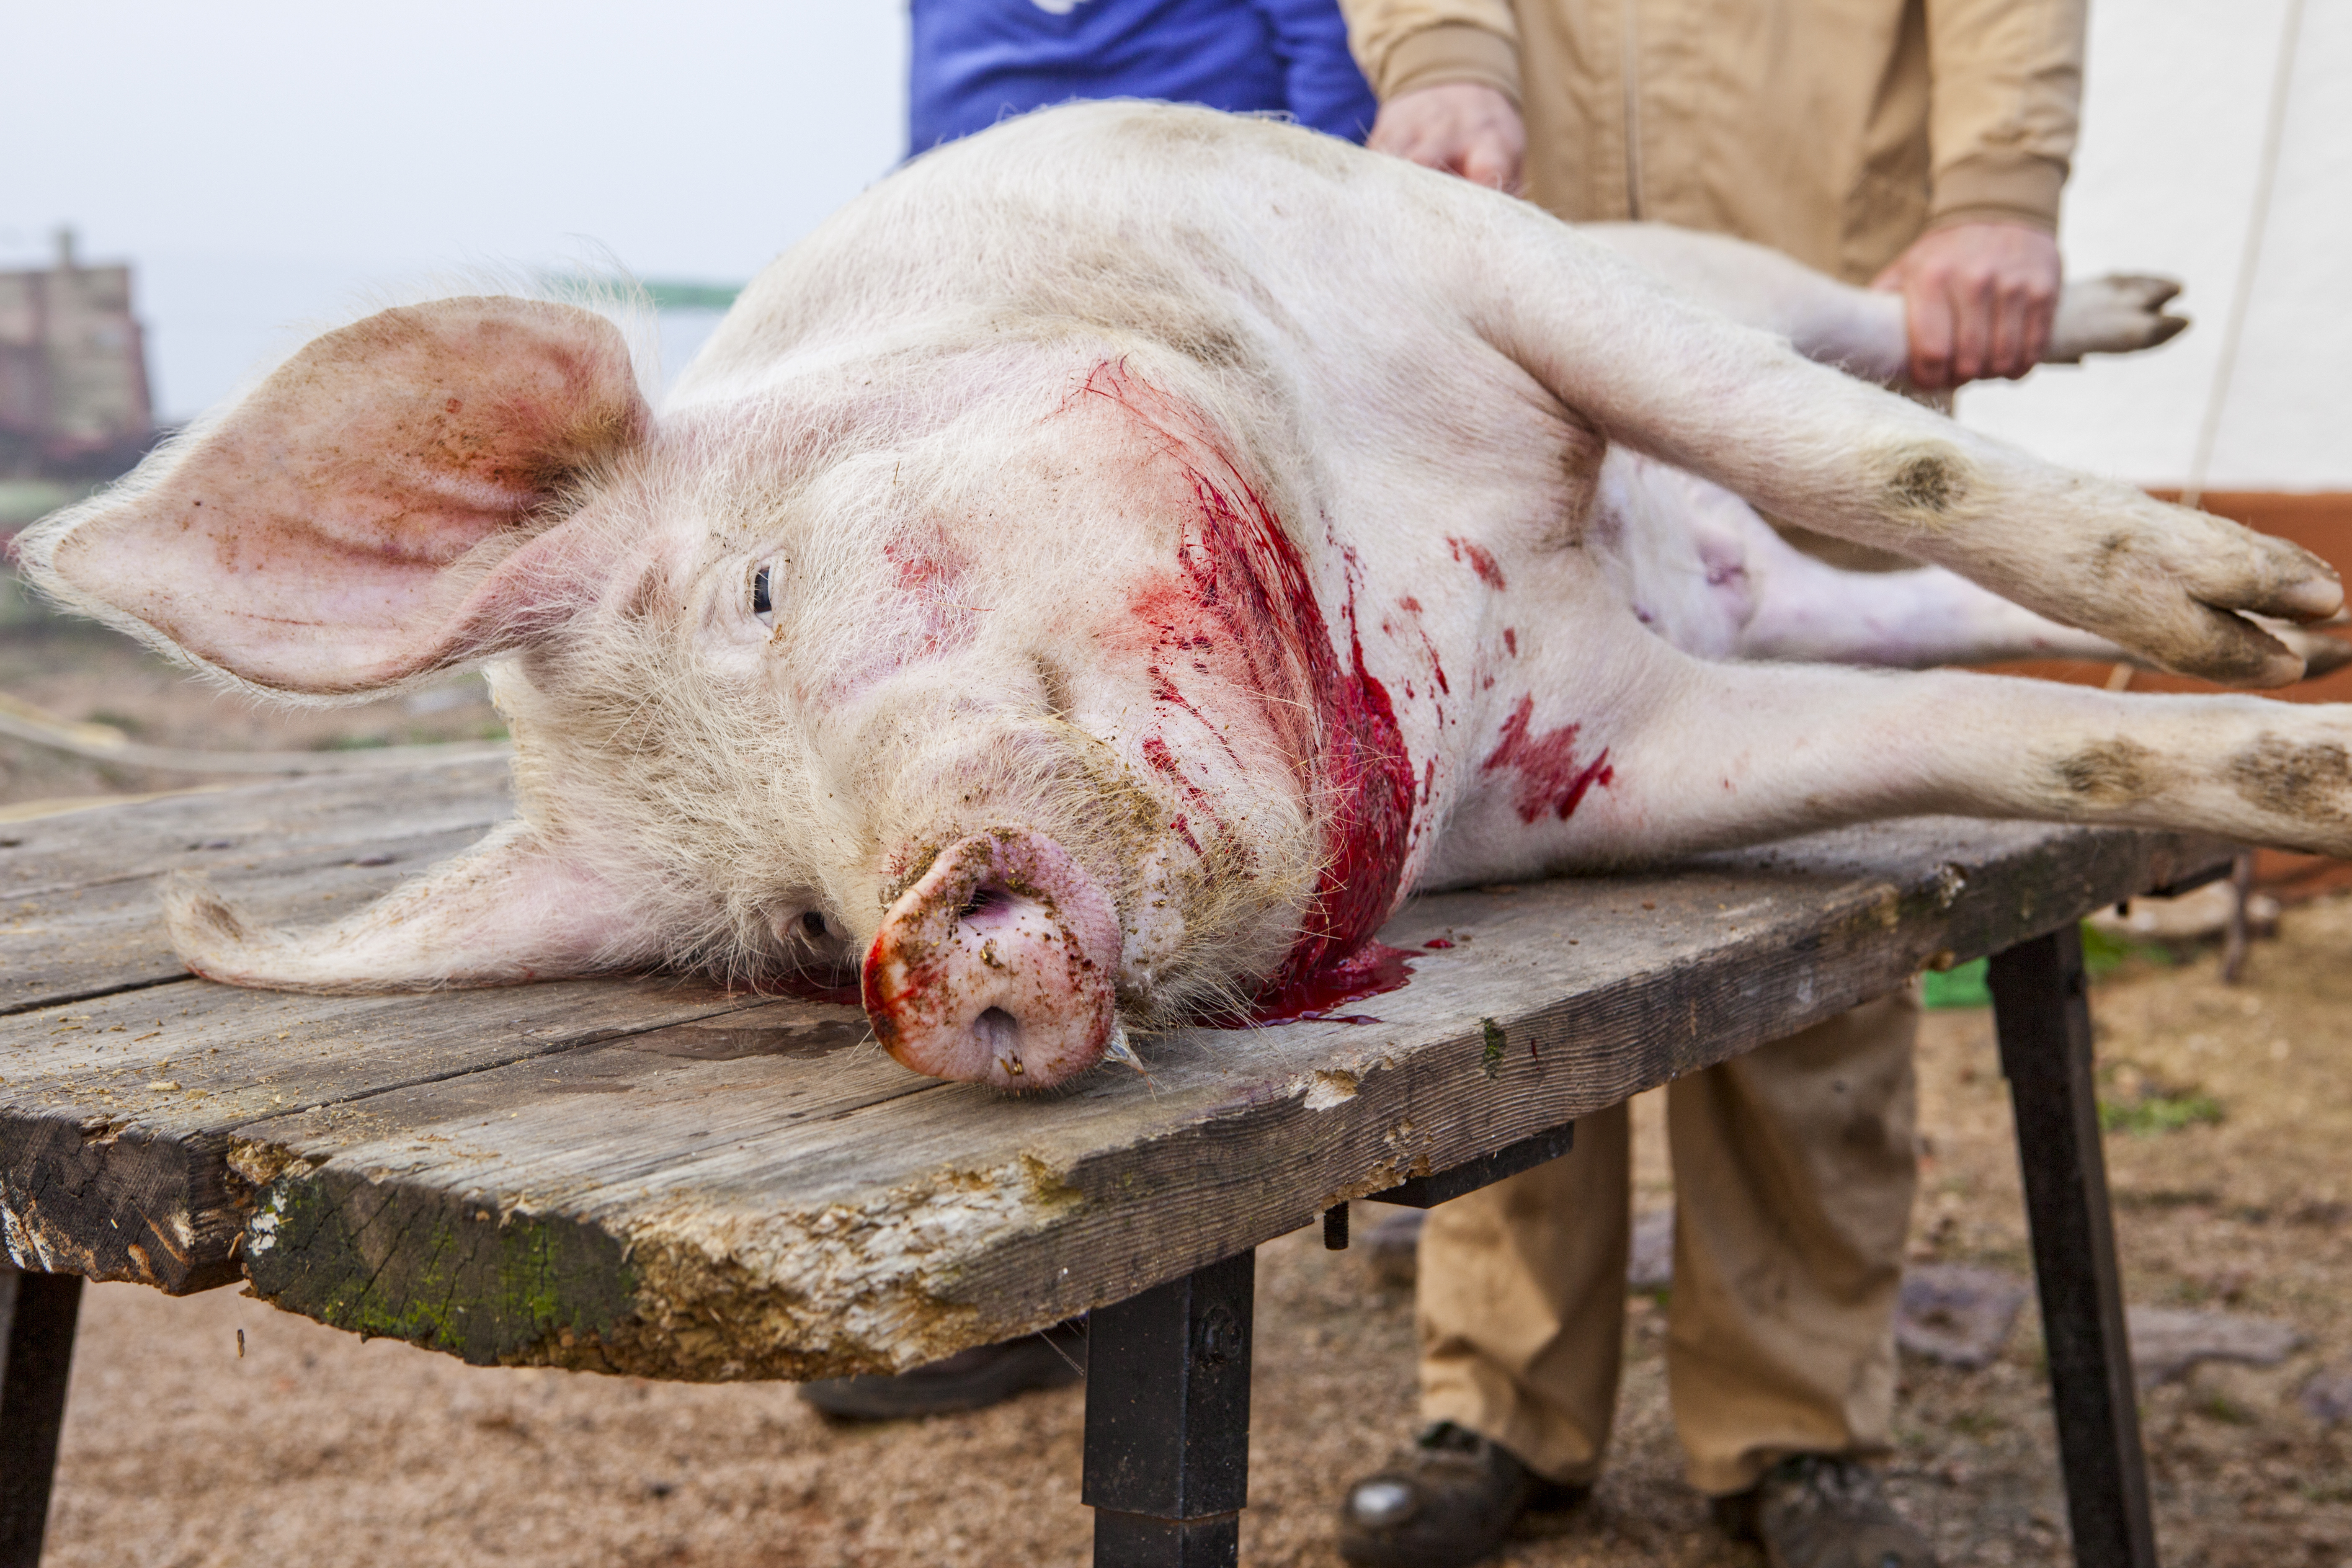 a dead pig after exsanguination